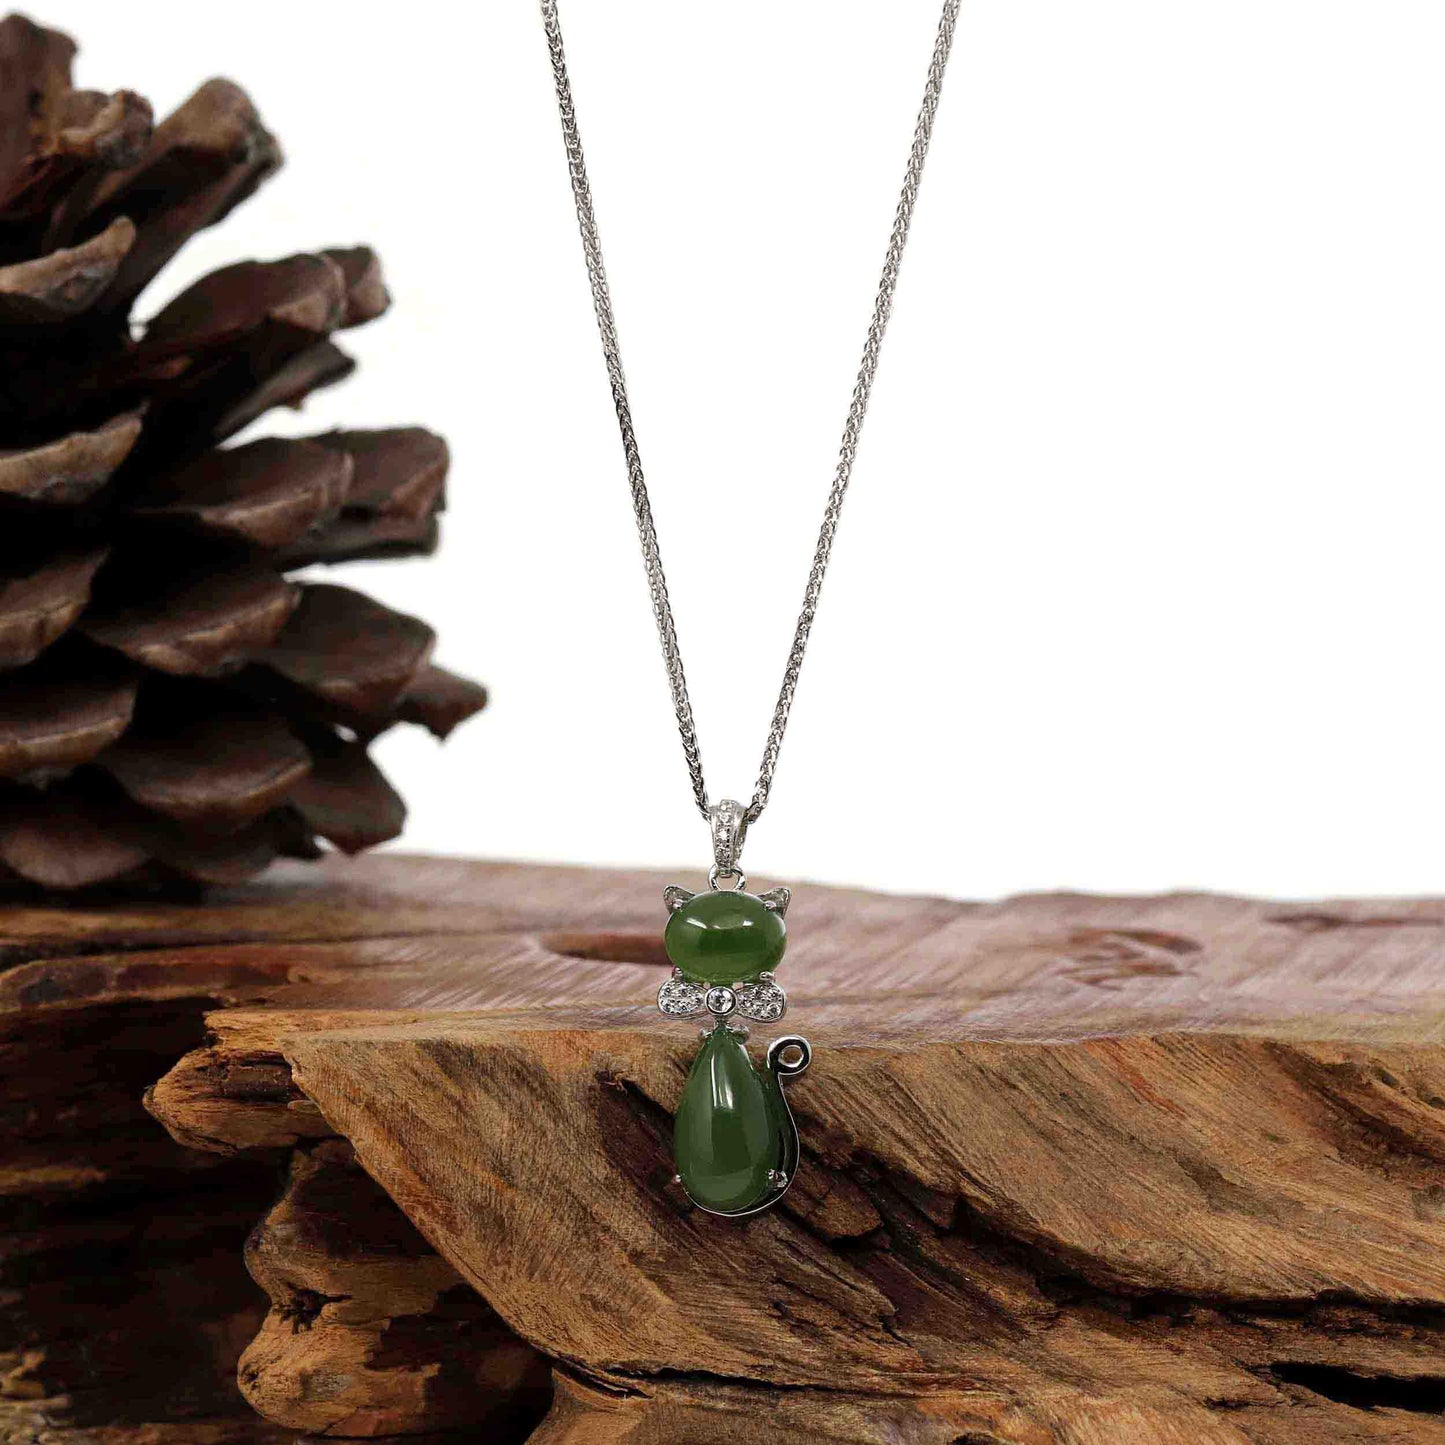 RealJade® Co. Silver Gemstone Necklace Baikalla "Lucky Kitten" Sterling Silver Genuine Nephrite Green Jade Cat Pendant Necklace